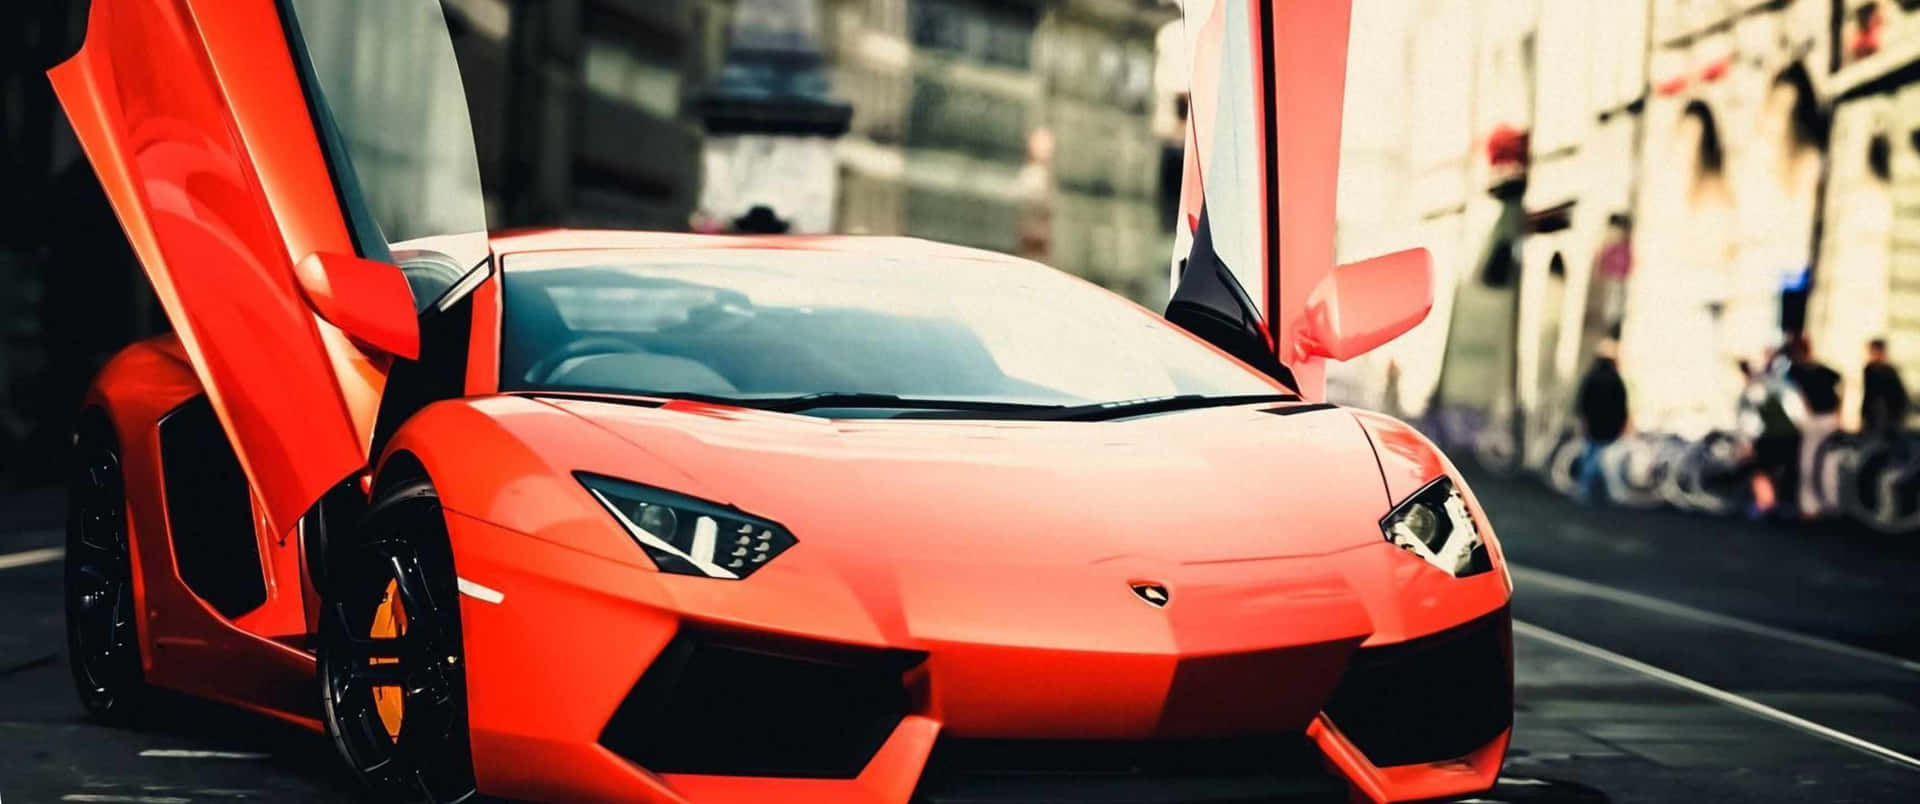 An Elegant Lamborghini cruising on the city streets